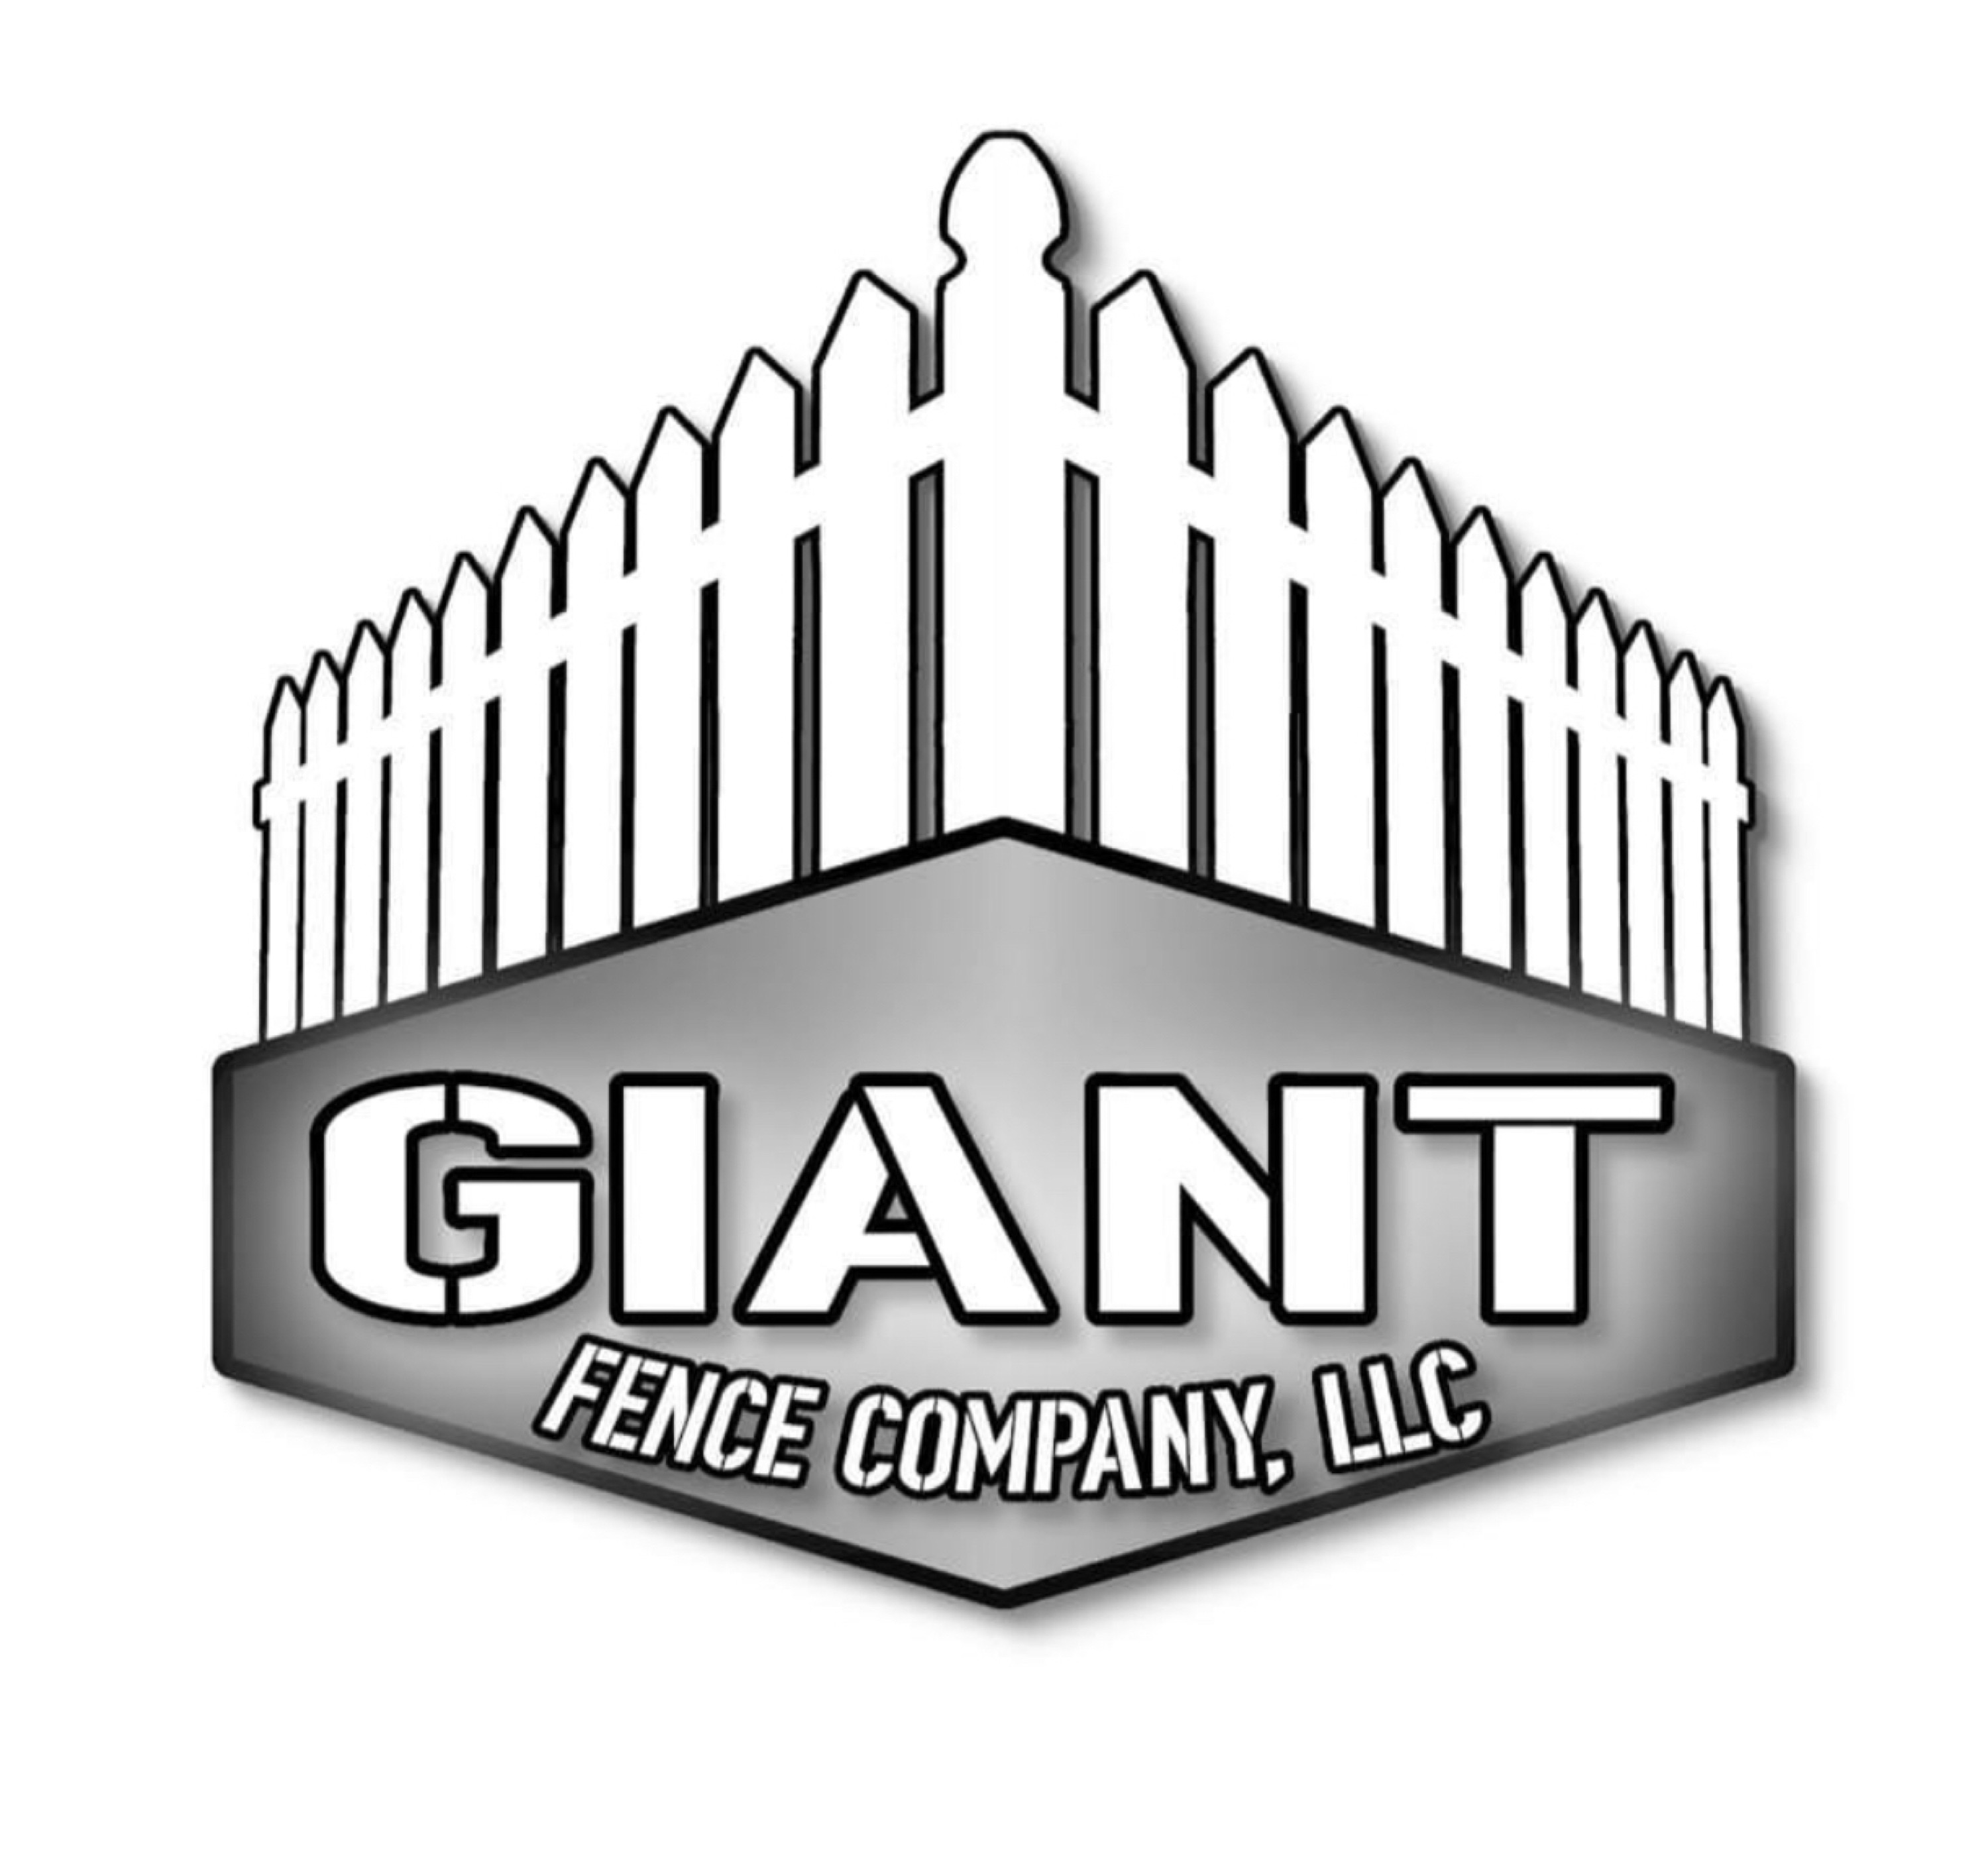 Giant Fence Company LLC Logo